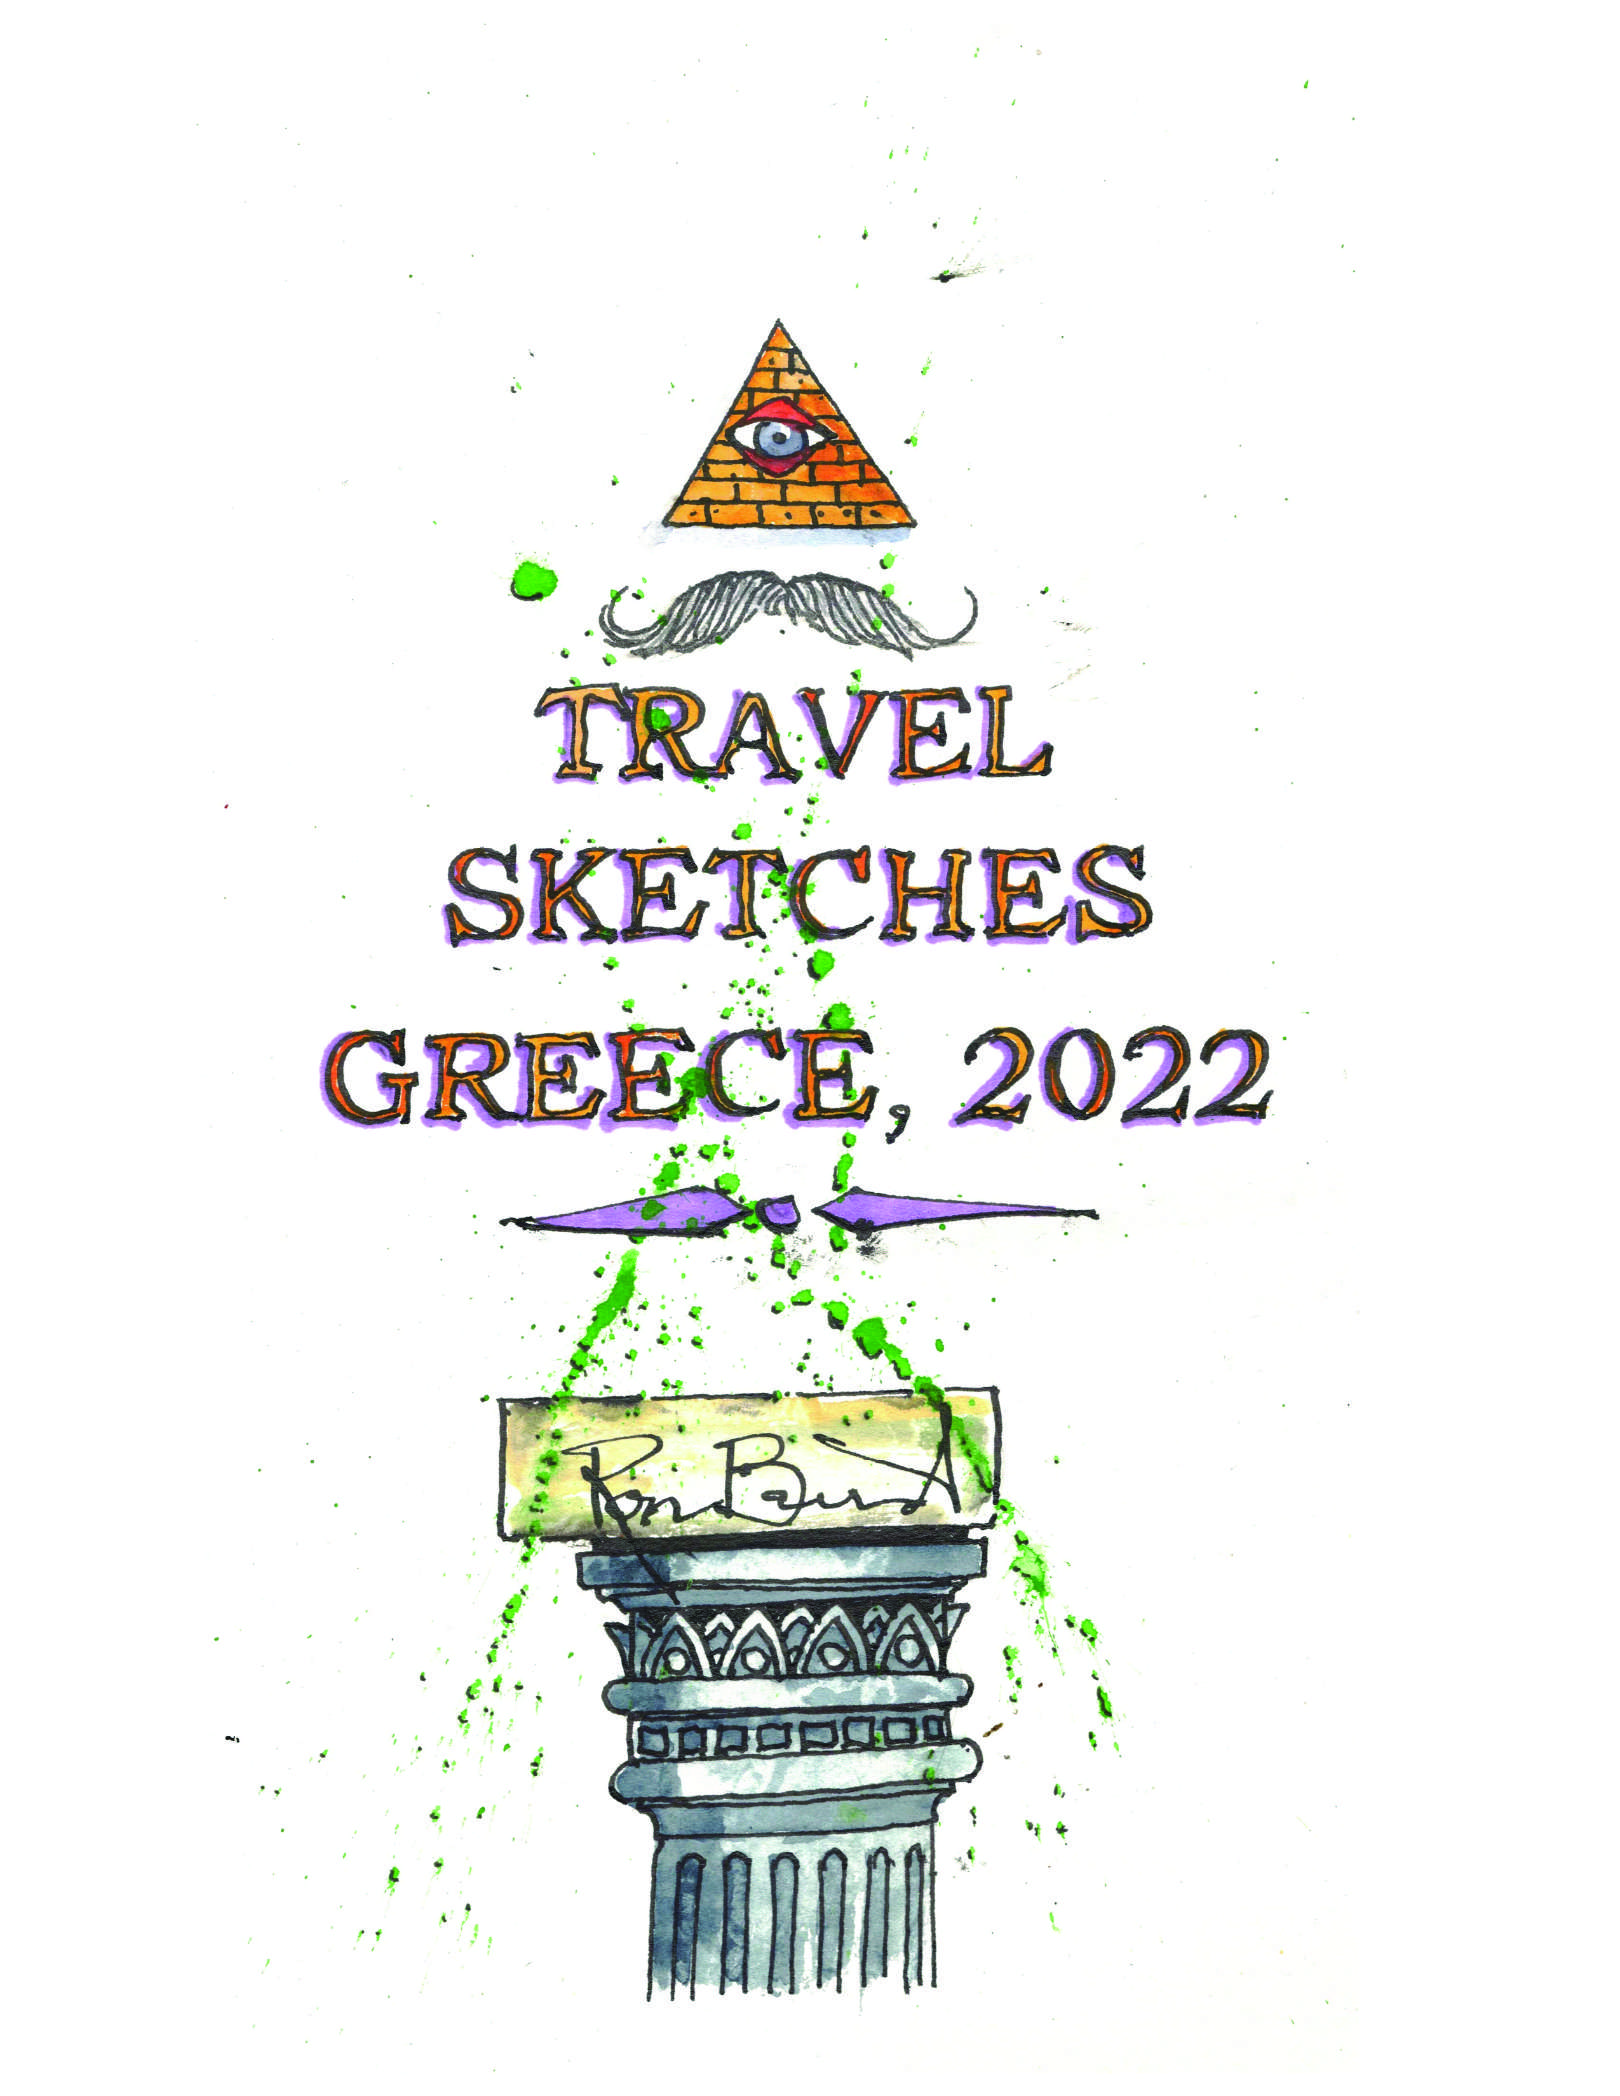 Greece sketchbook sketch 2